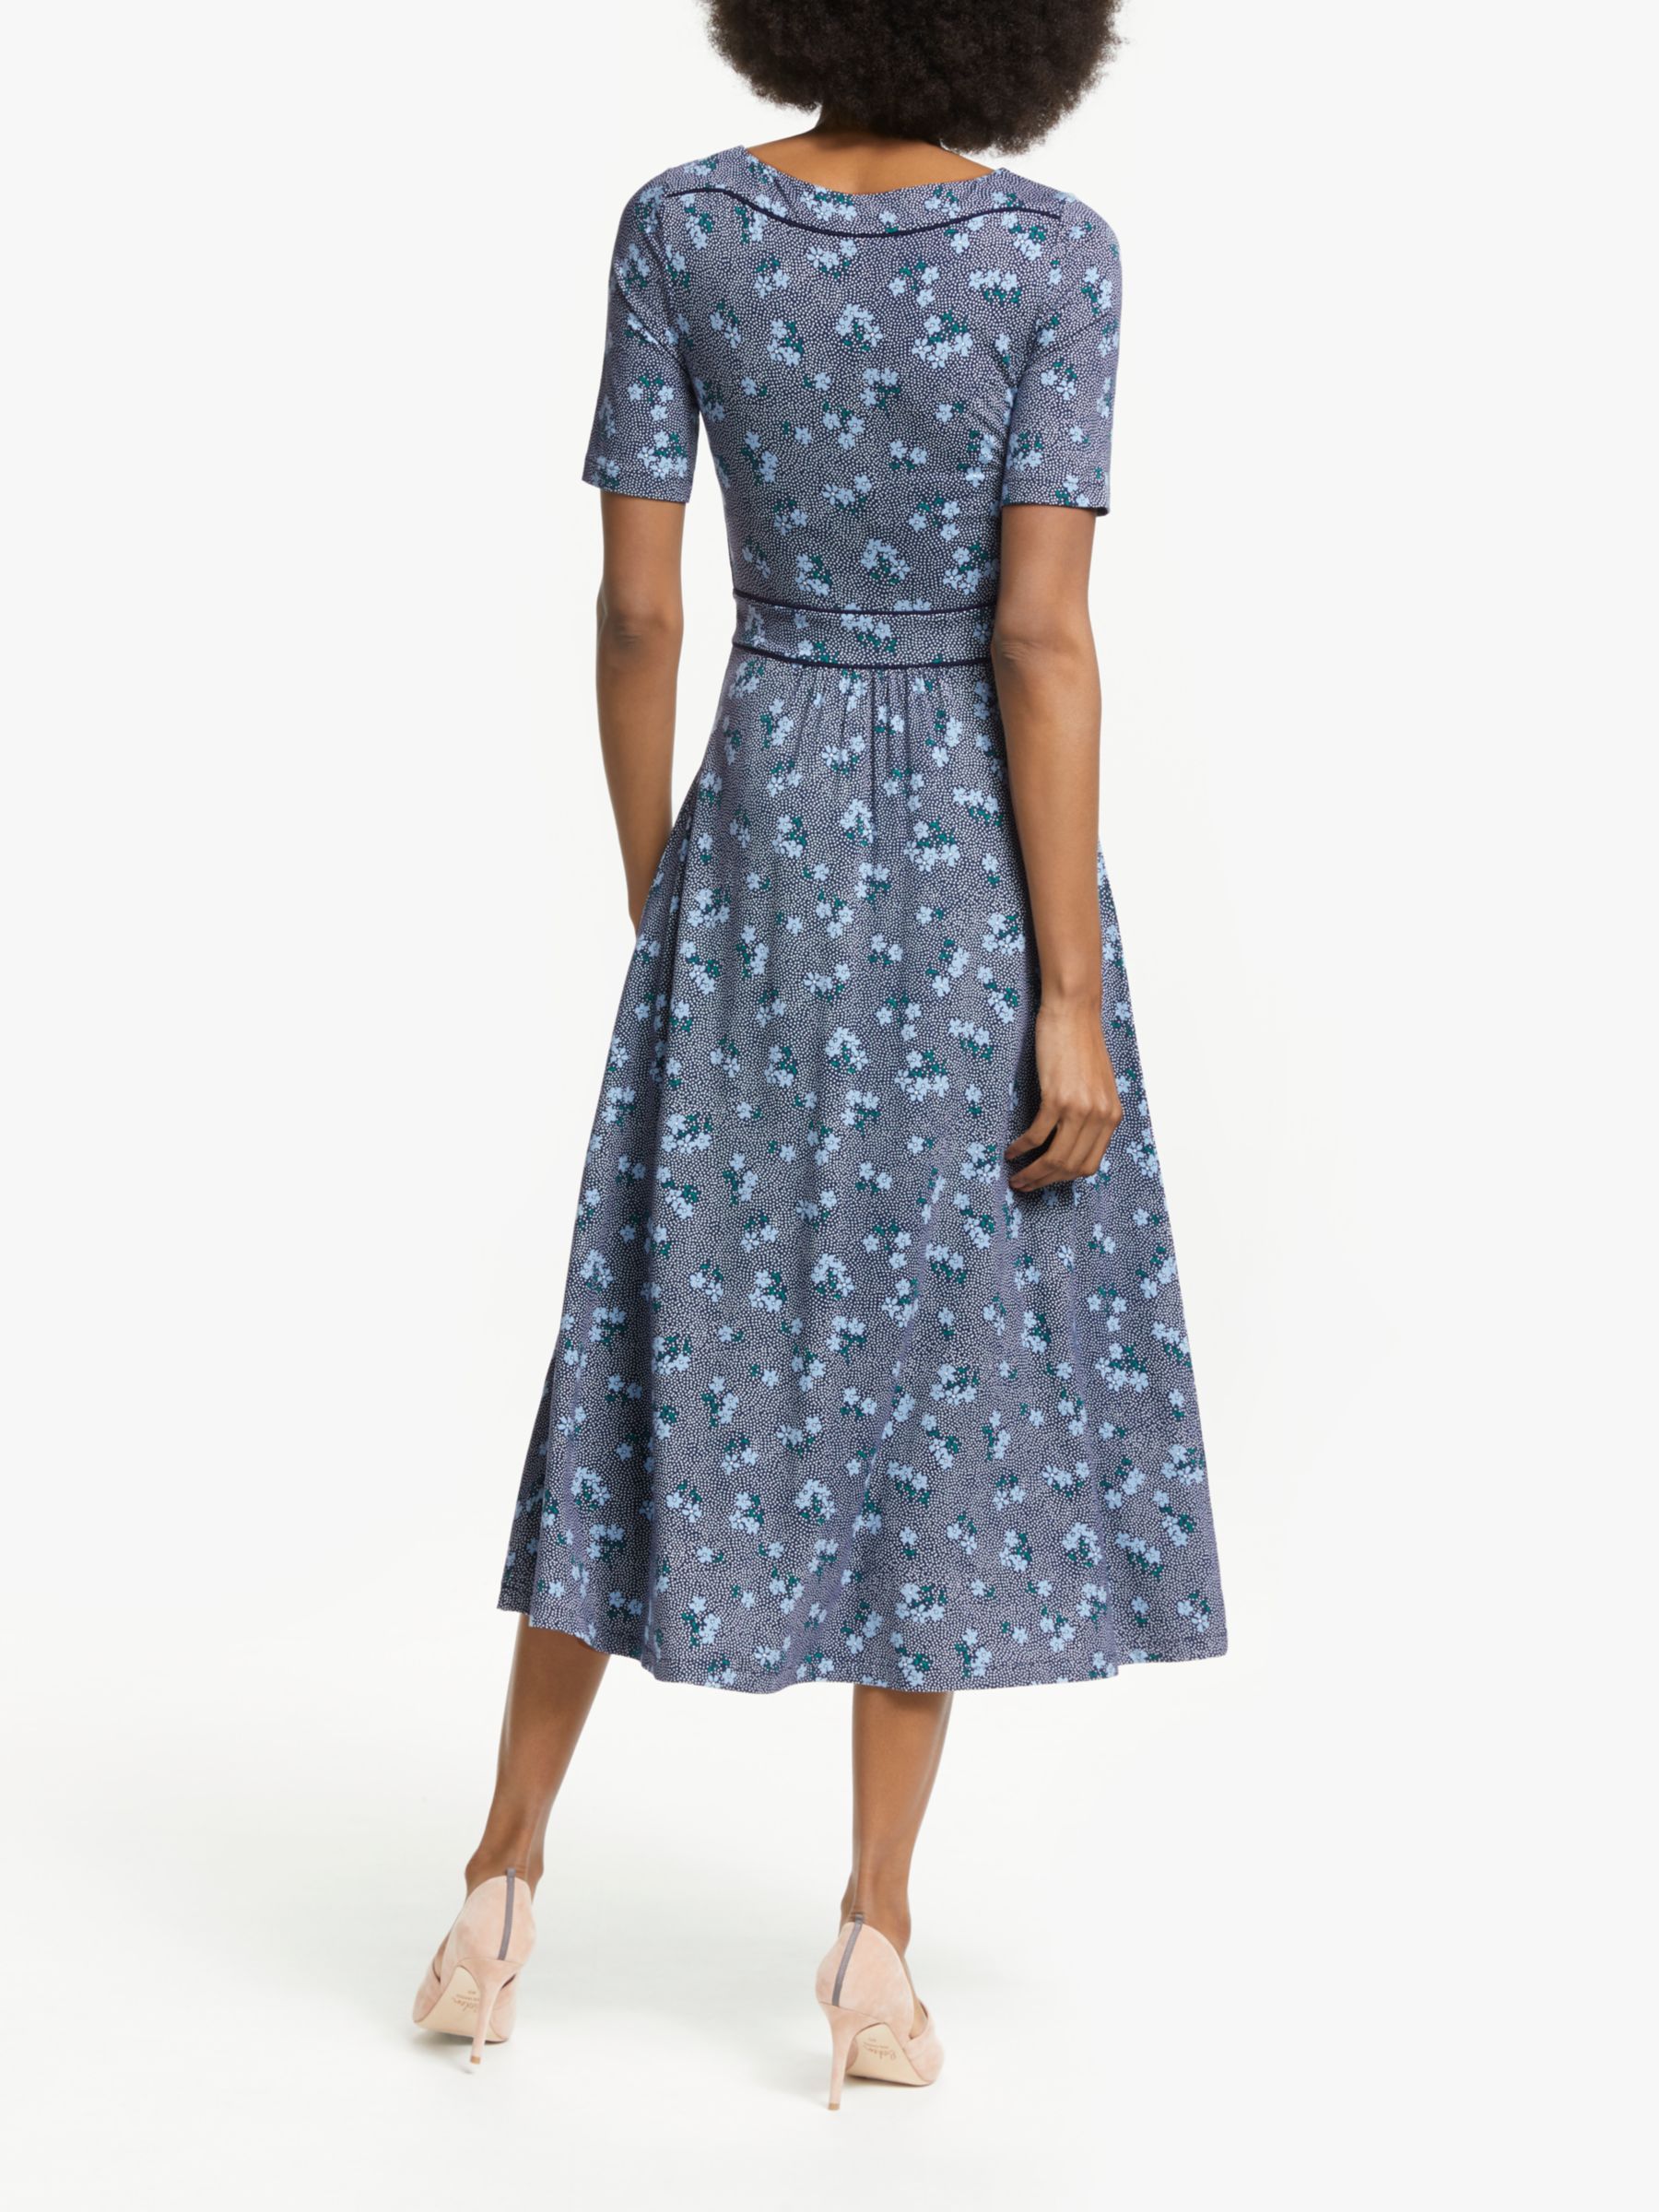 Boden Ava Floral Spot Midi Dress, Navy/Heron Blue